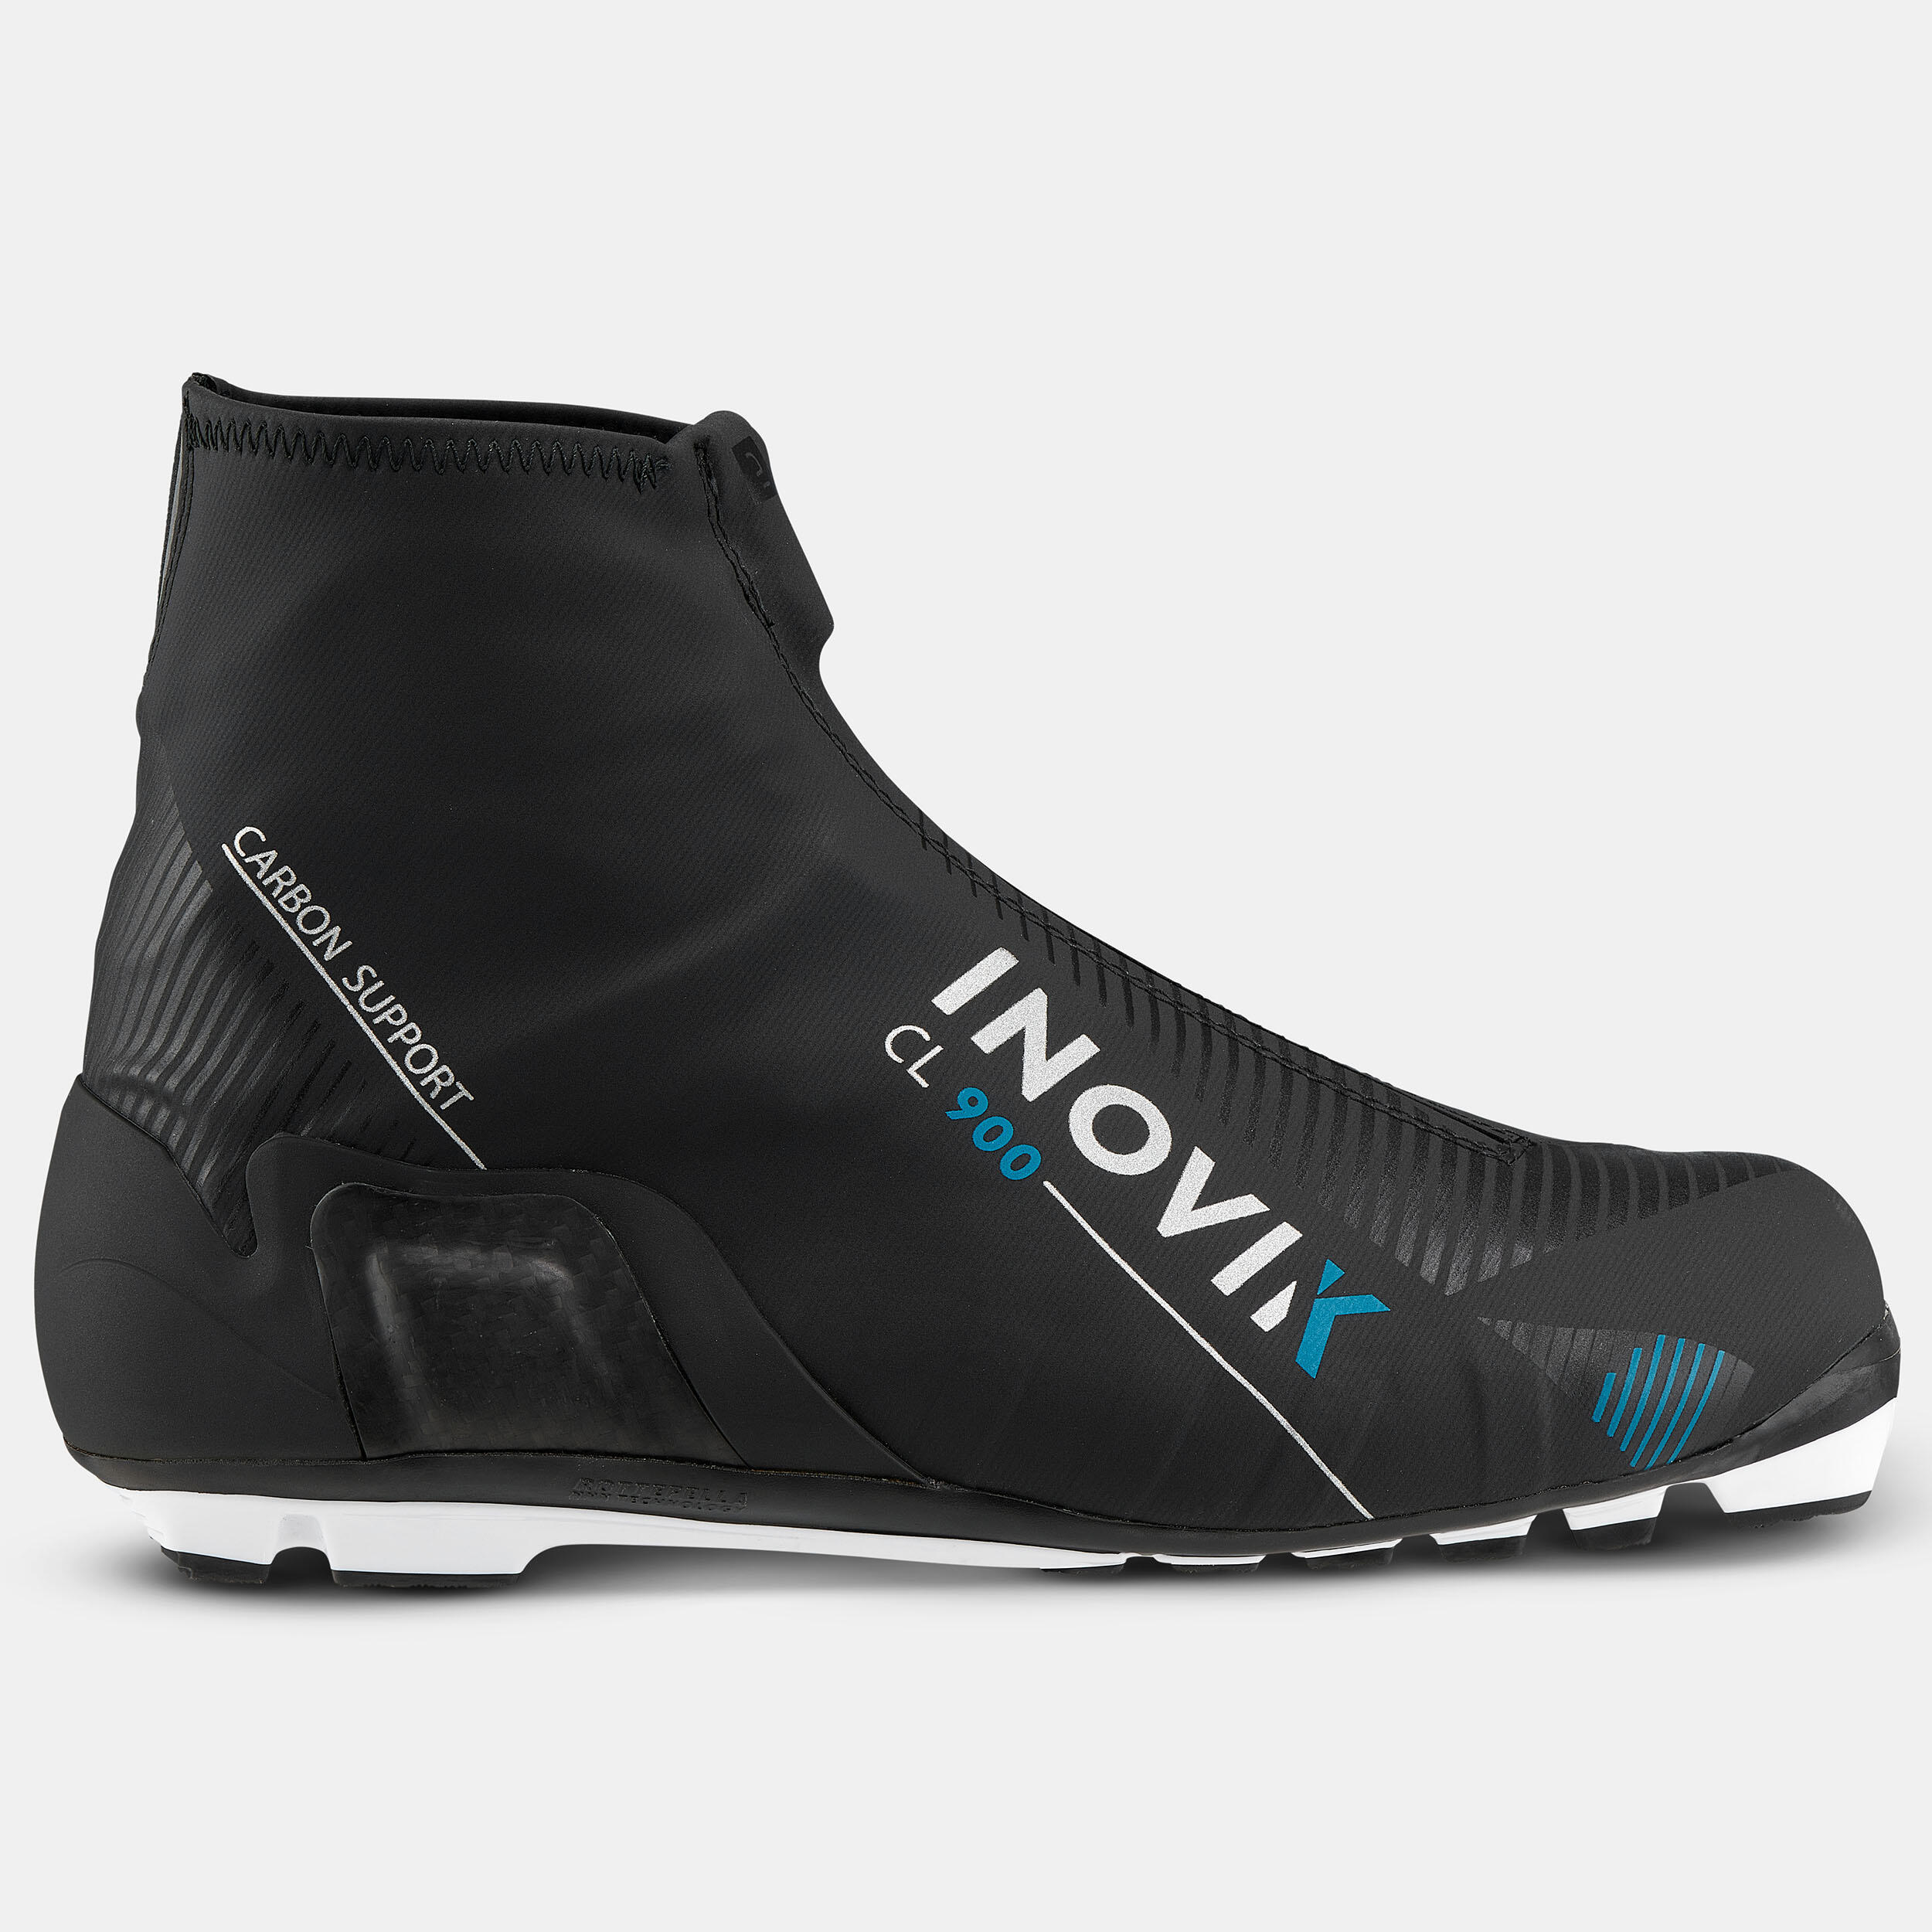 Men's Classic Cross-Country Ski Boots - XC S 900 Black - INOVIK